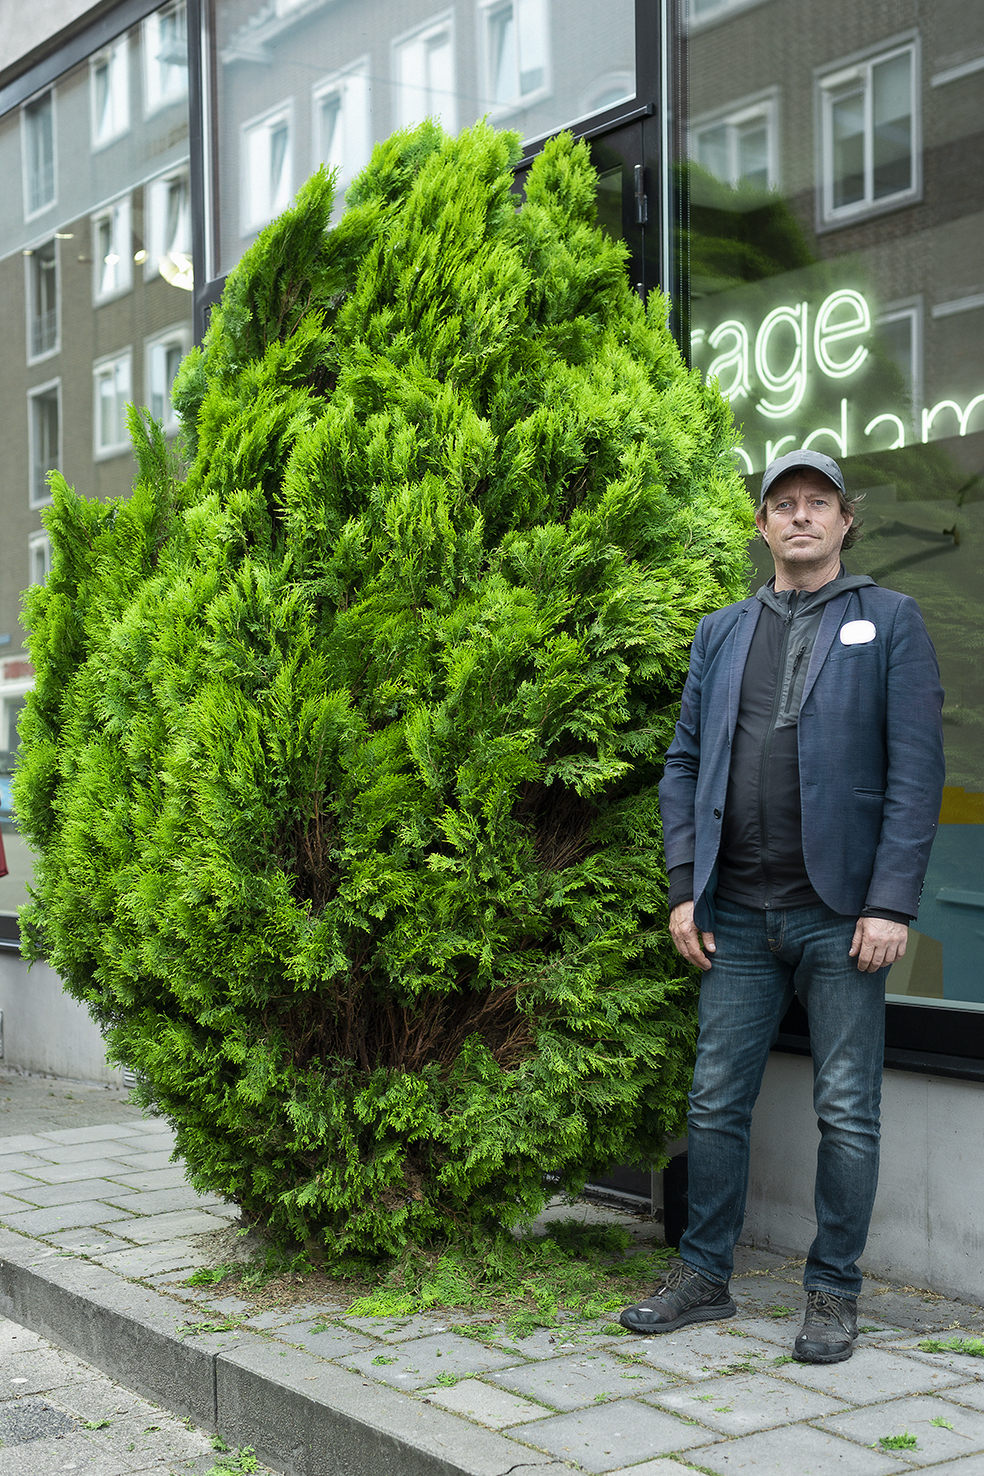 Garage Rotterdam: “If Plants Could Talk”